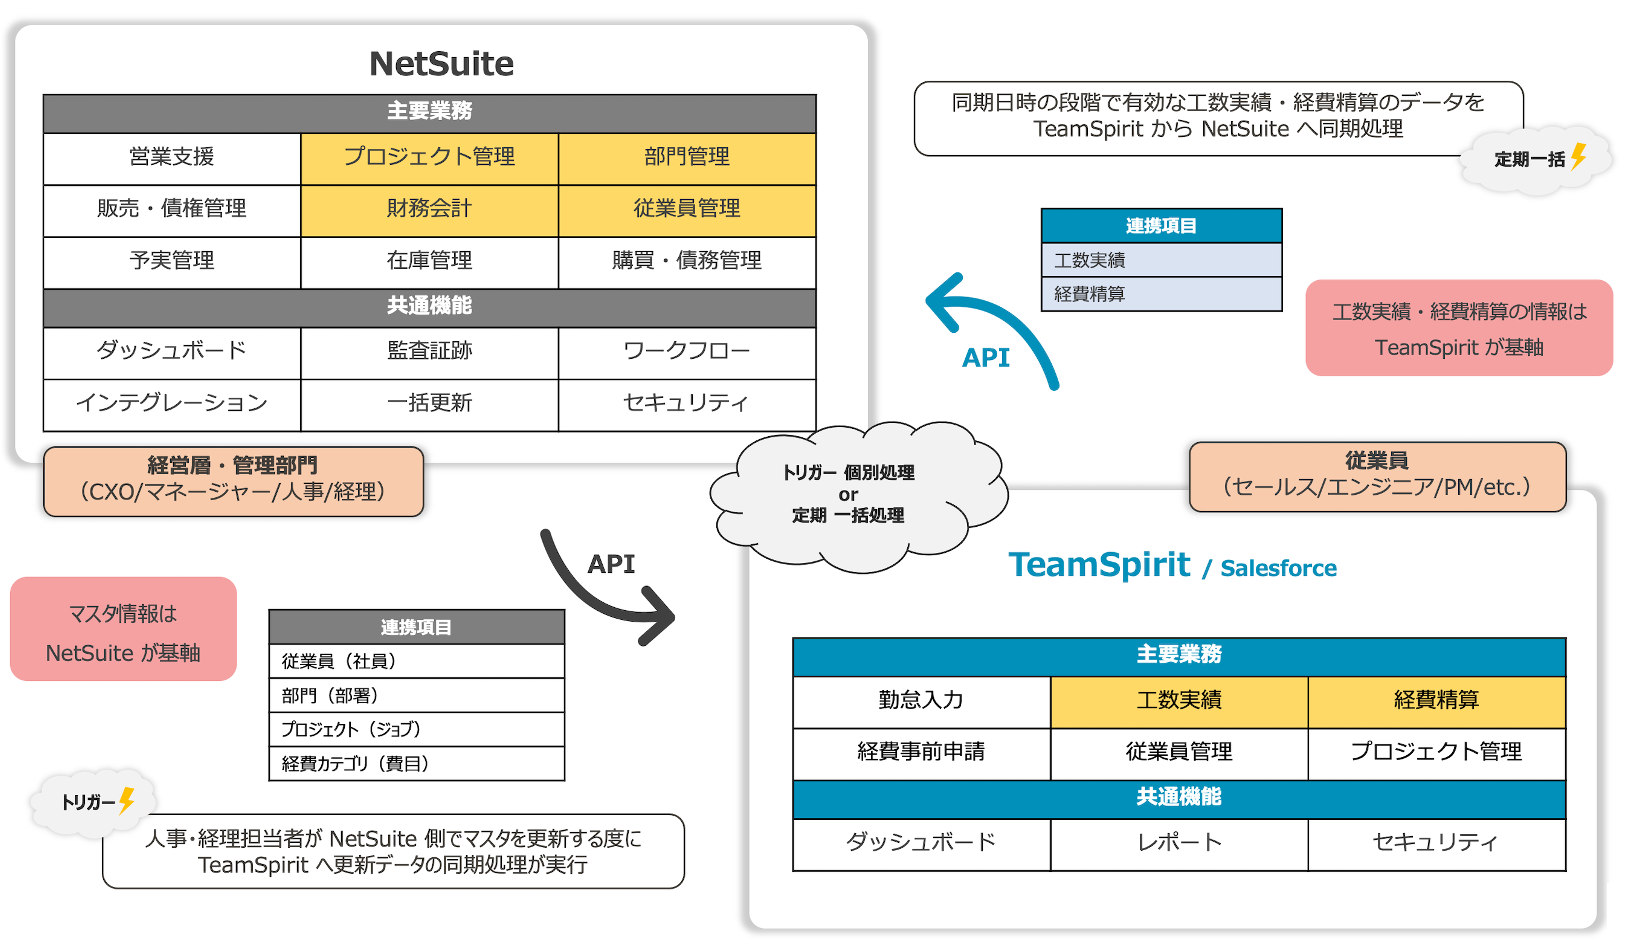 NetSuite-TeamSpirit連携の概要図